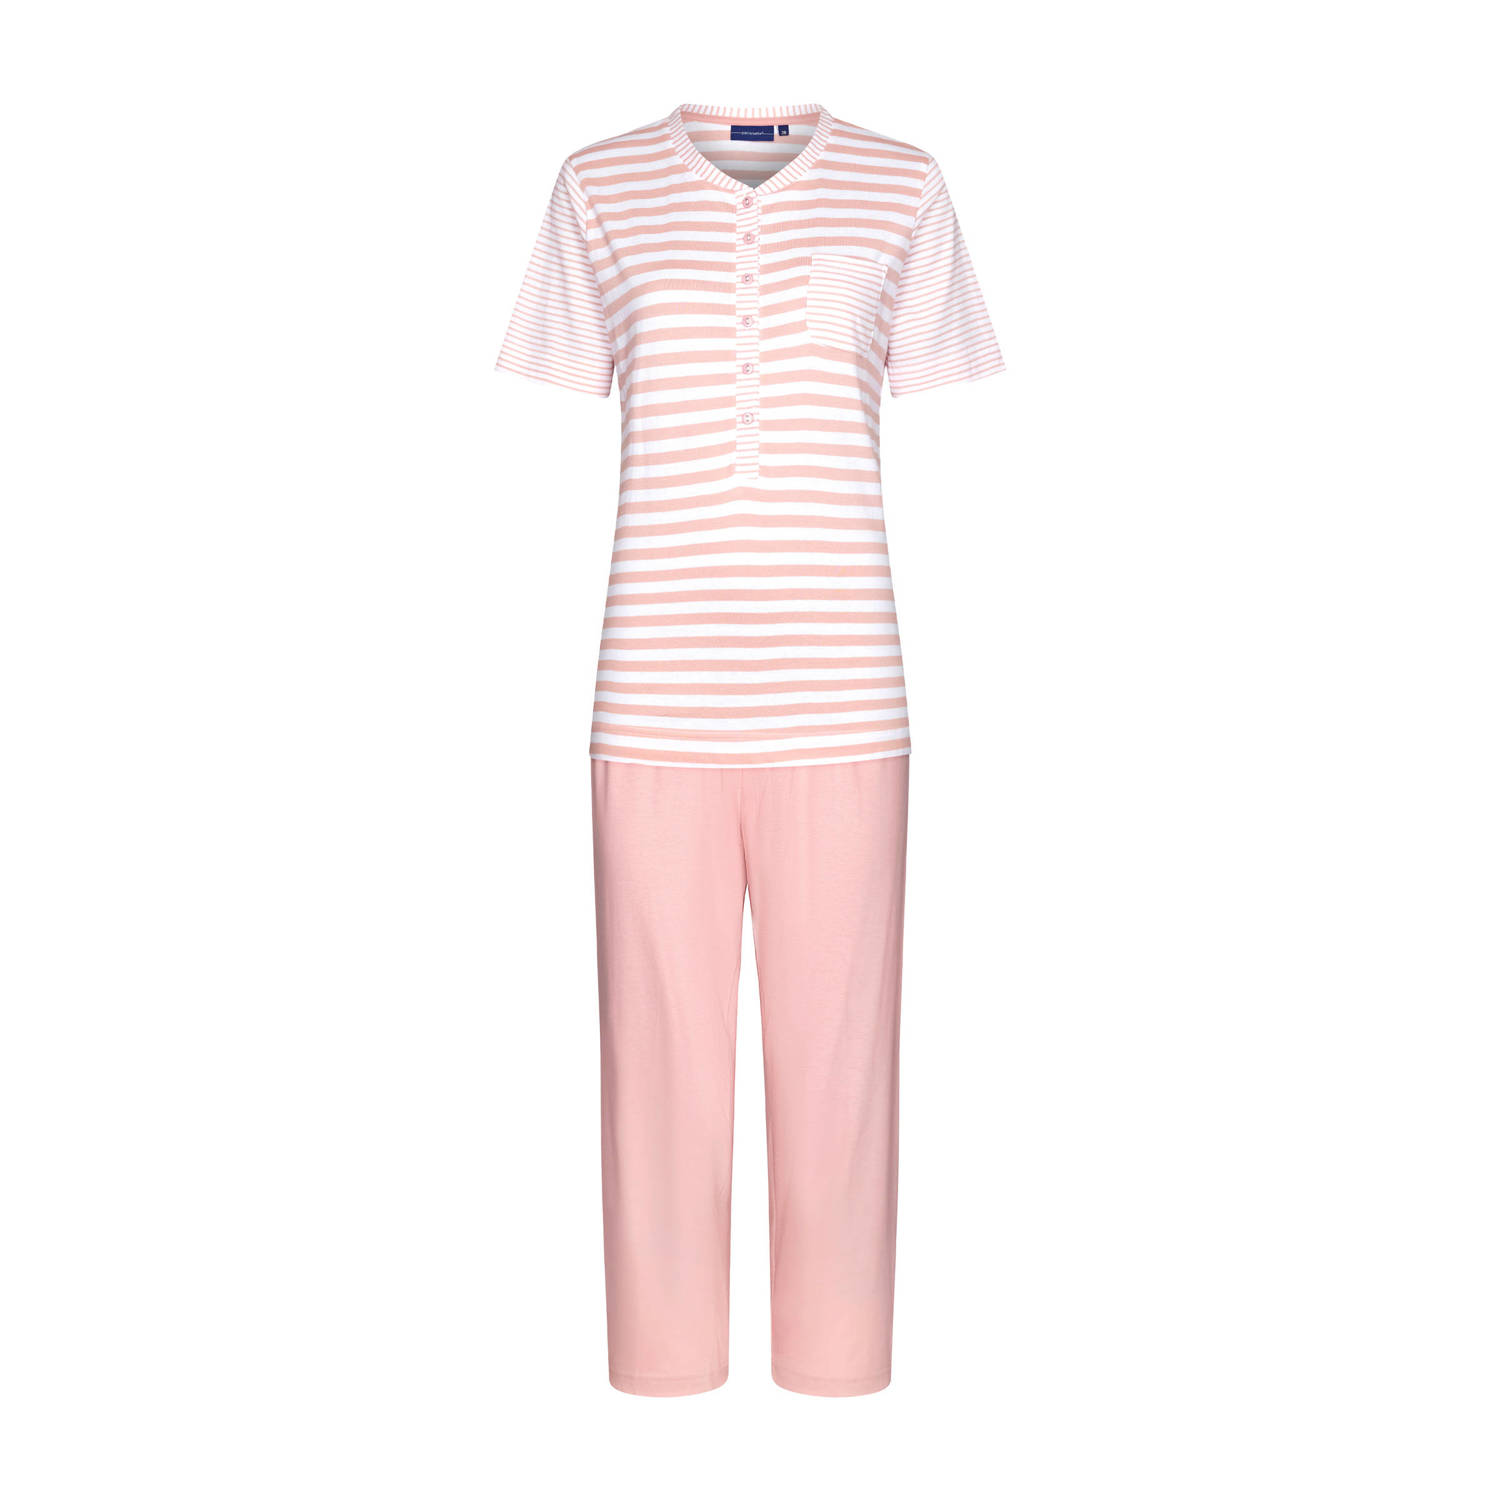 Pastunette pyjama roze wit